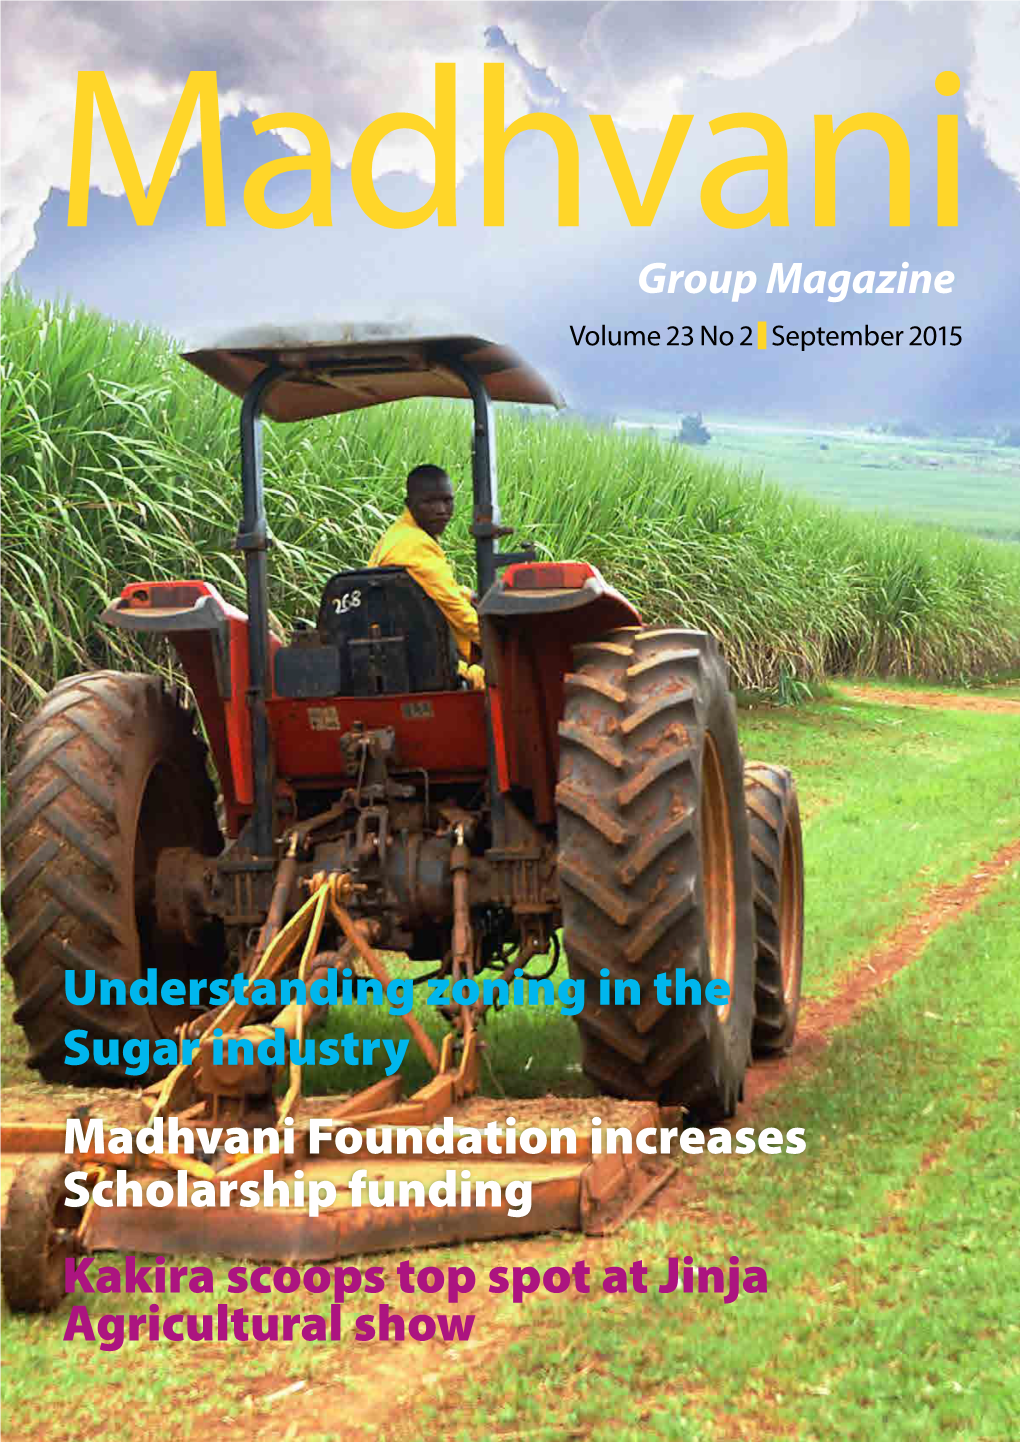 Madhvani Group Magazine Volume 23 No 2 September 2015